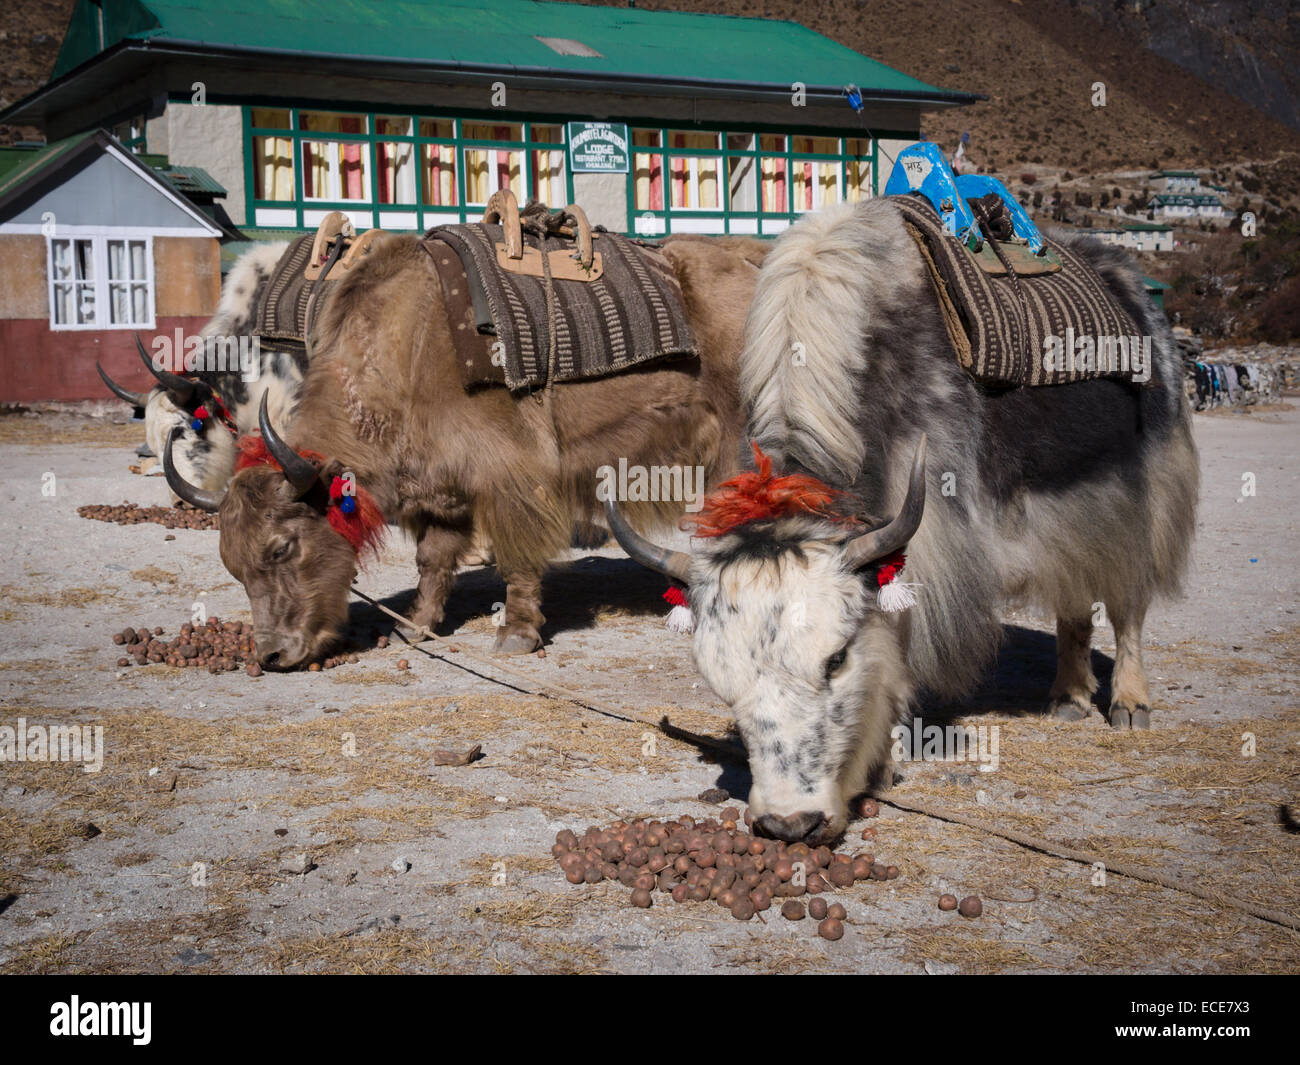 Los yaks alimentándose de patatas en Khumjung, región de Khumbu, Nepal Foto de stock